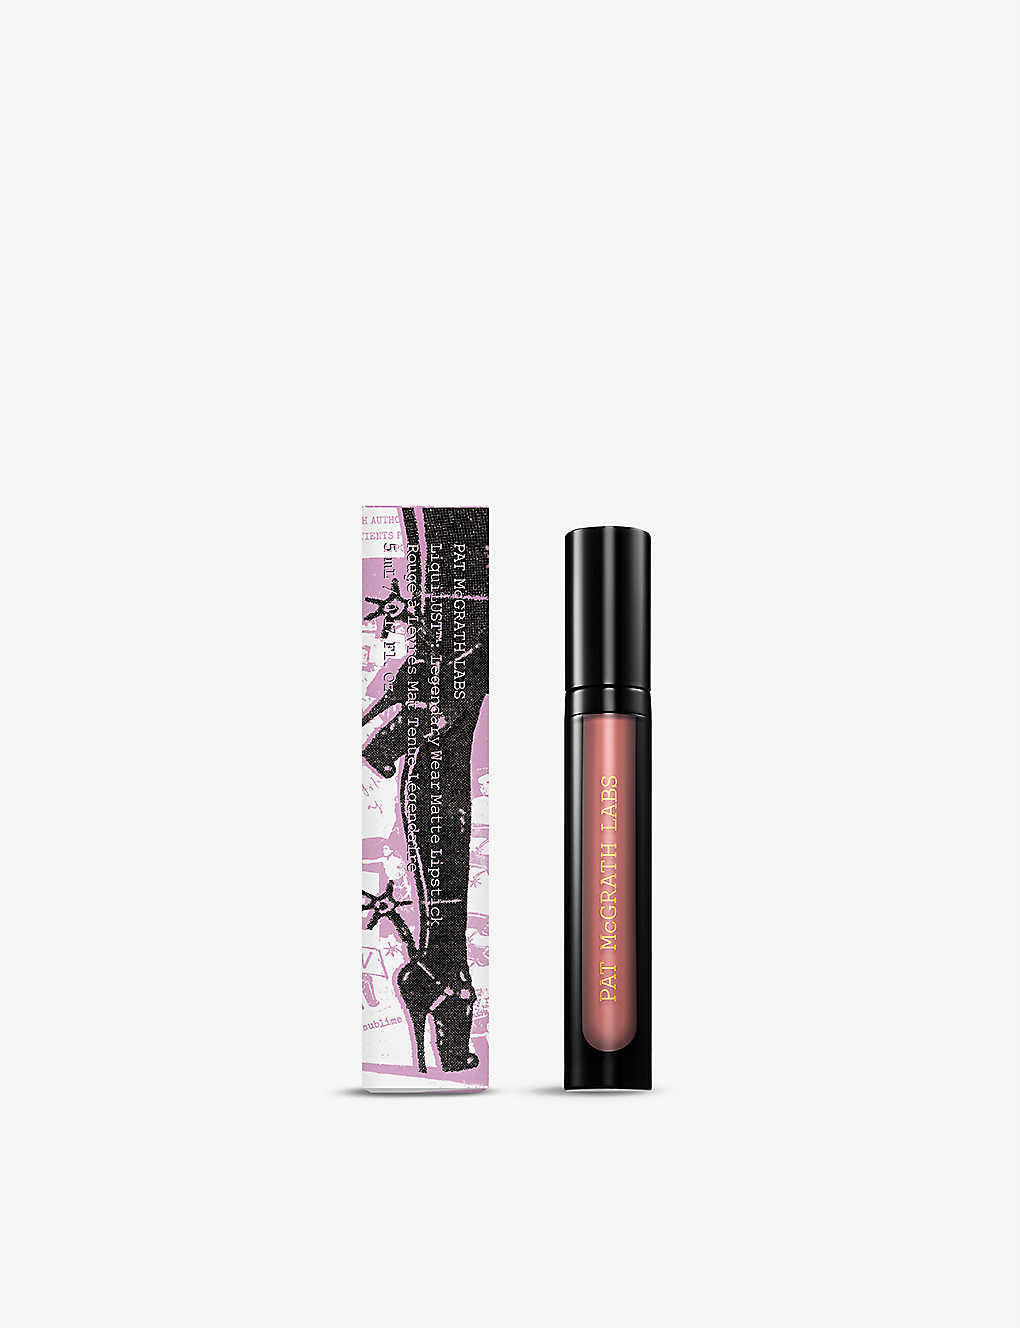 Pat Mcgrath Labs Divine Rose Liquilust™: Legendary Wear Matte Lipstick